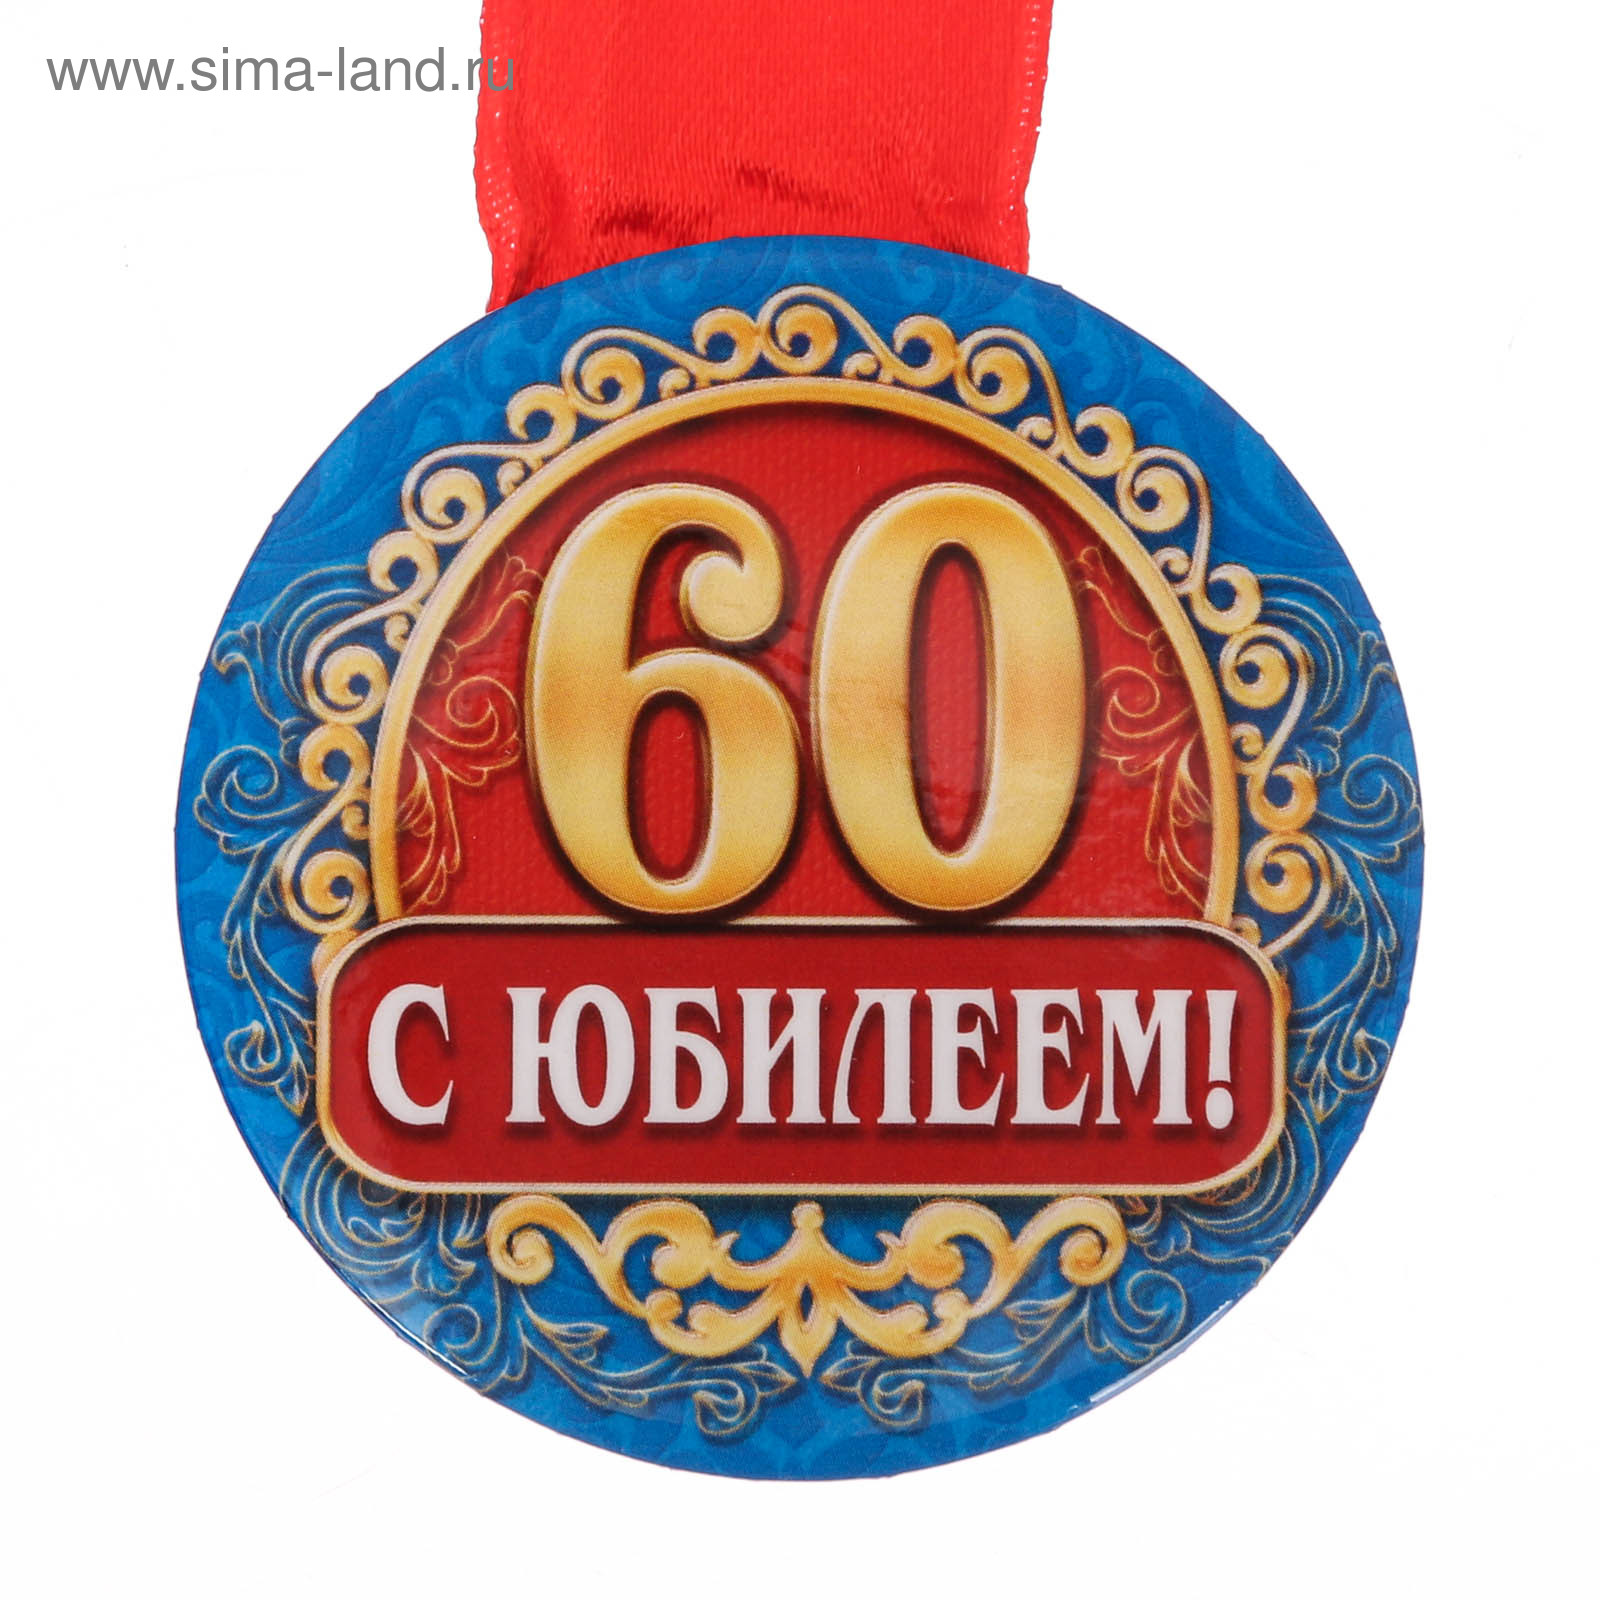 Медаль 60 лет юбилей. Медаль "60 лет". Медаль 60 лет на день рождения. Юбилейная медаль 60 лет мужчине. Медаль юбиляру 60 лет мужчине.